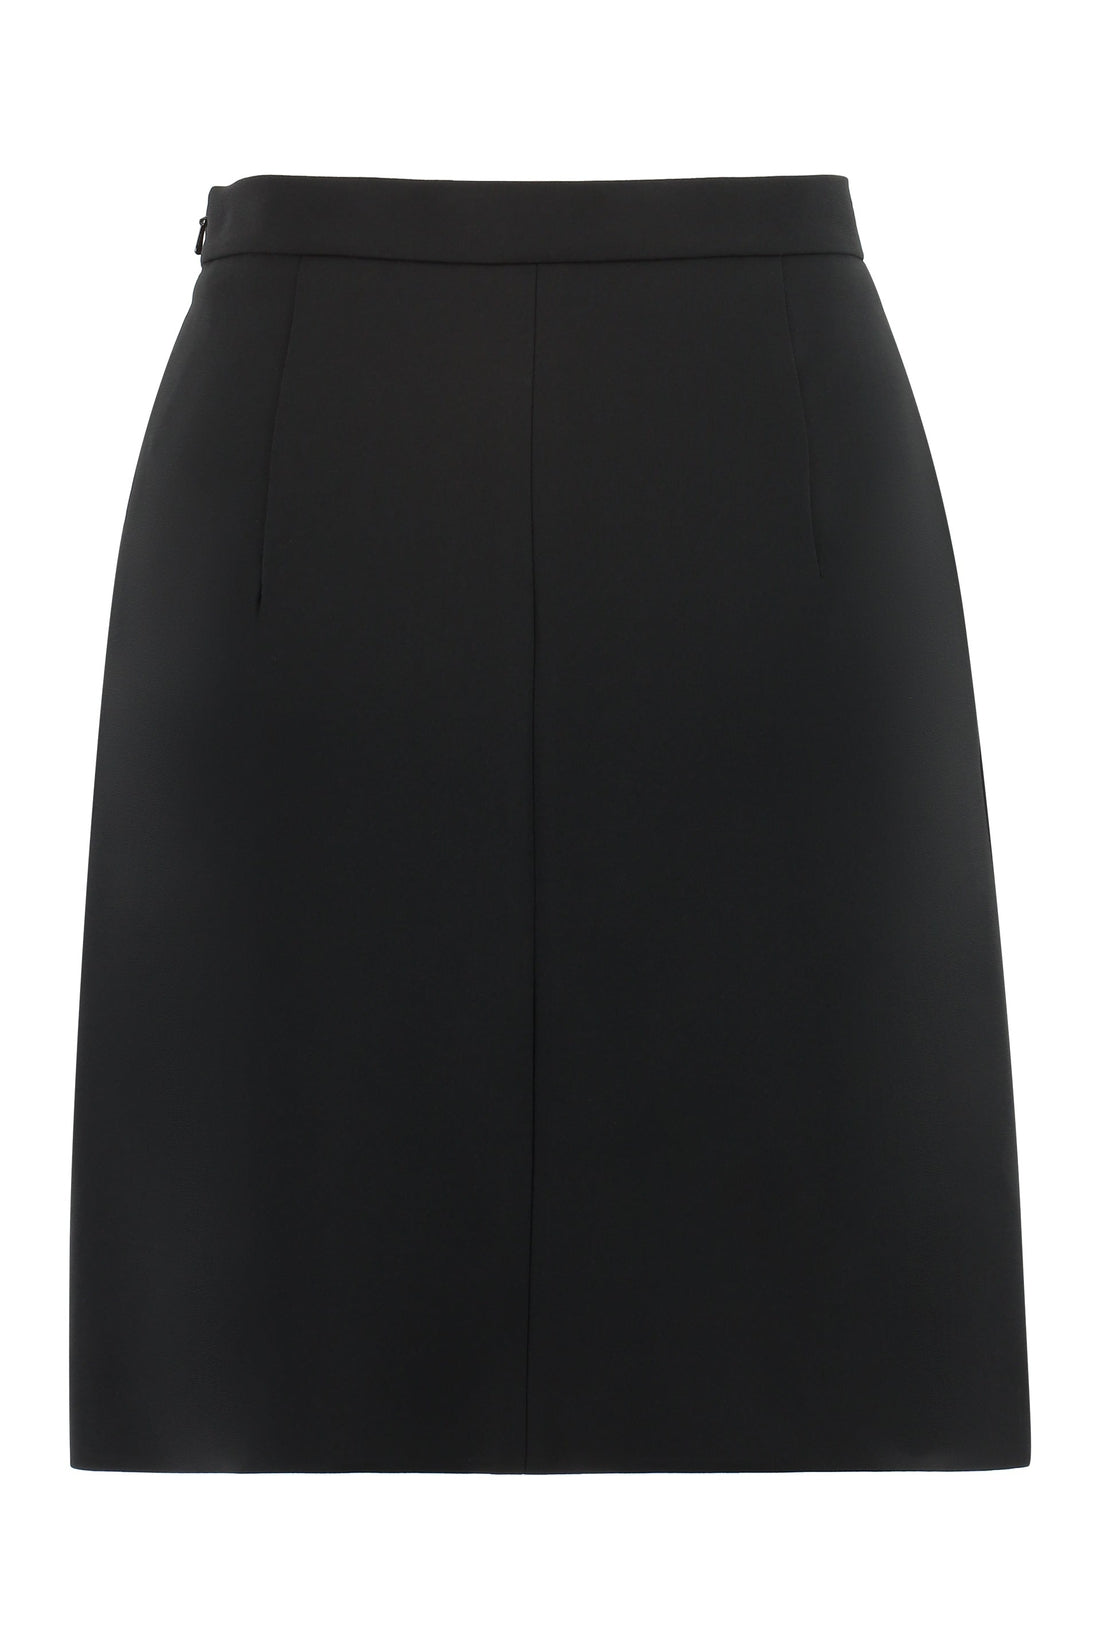 Max Mara Studio-OUTLET-SALE-Calesse crepe mini skirt-ARCHIVIST